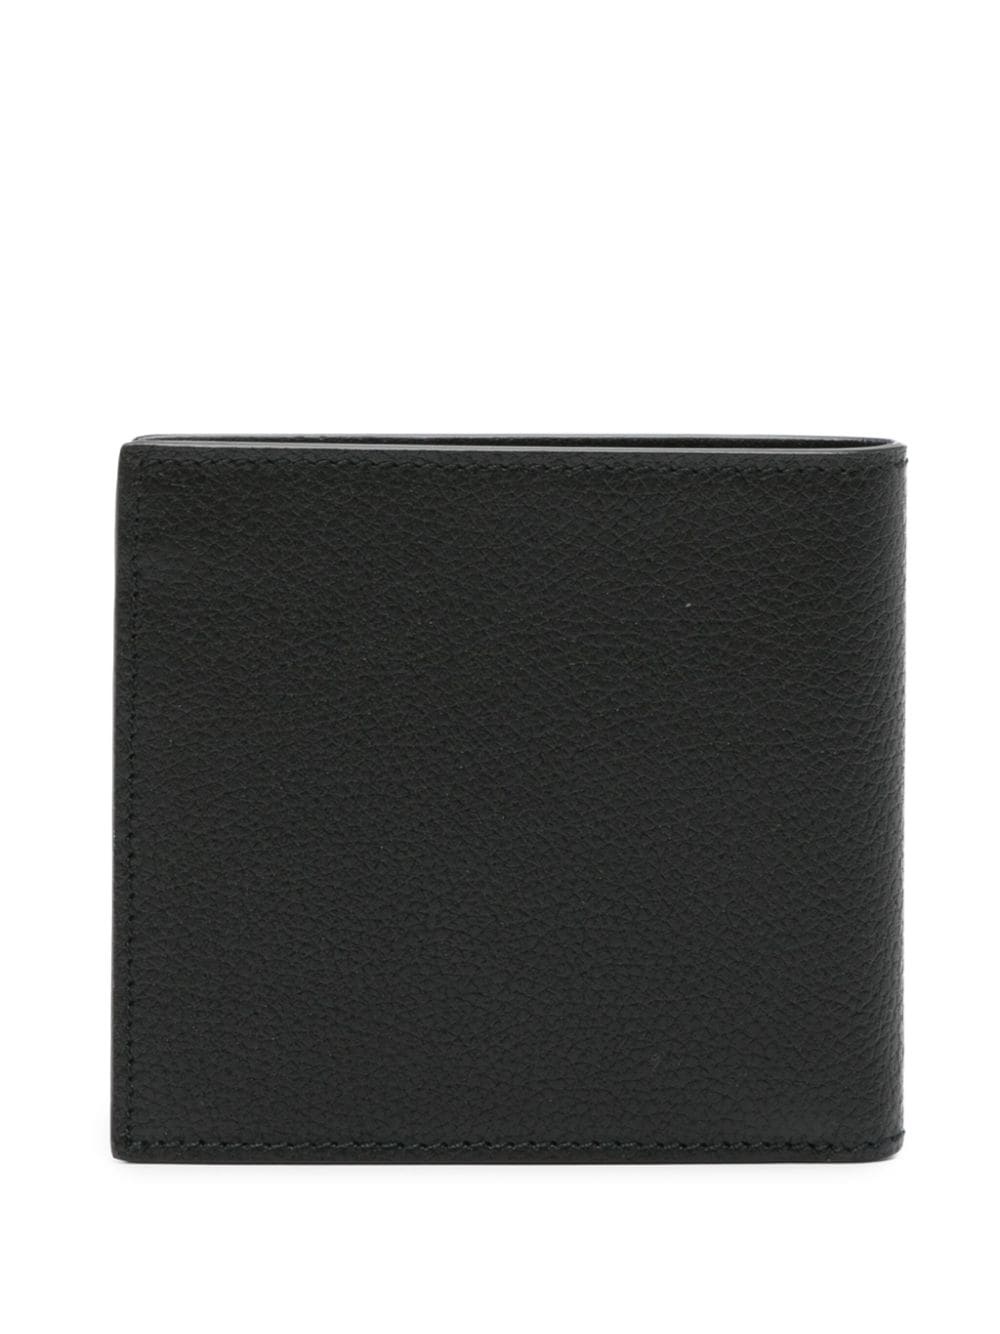 Graffiti bi-fold leather wallet - 2